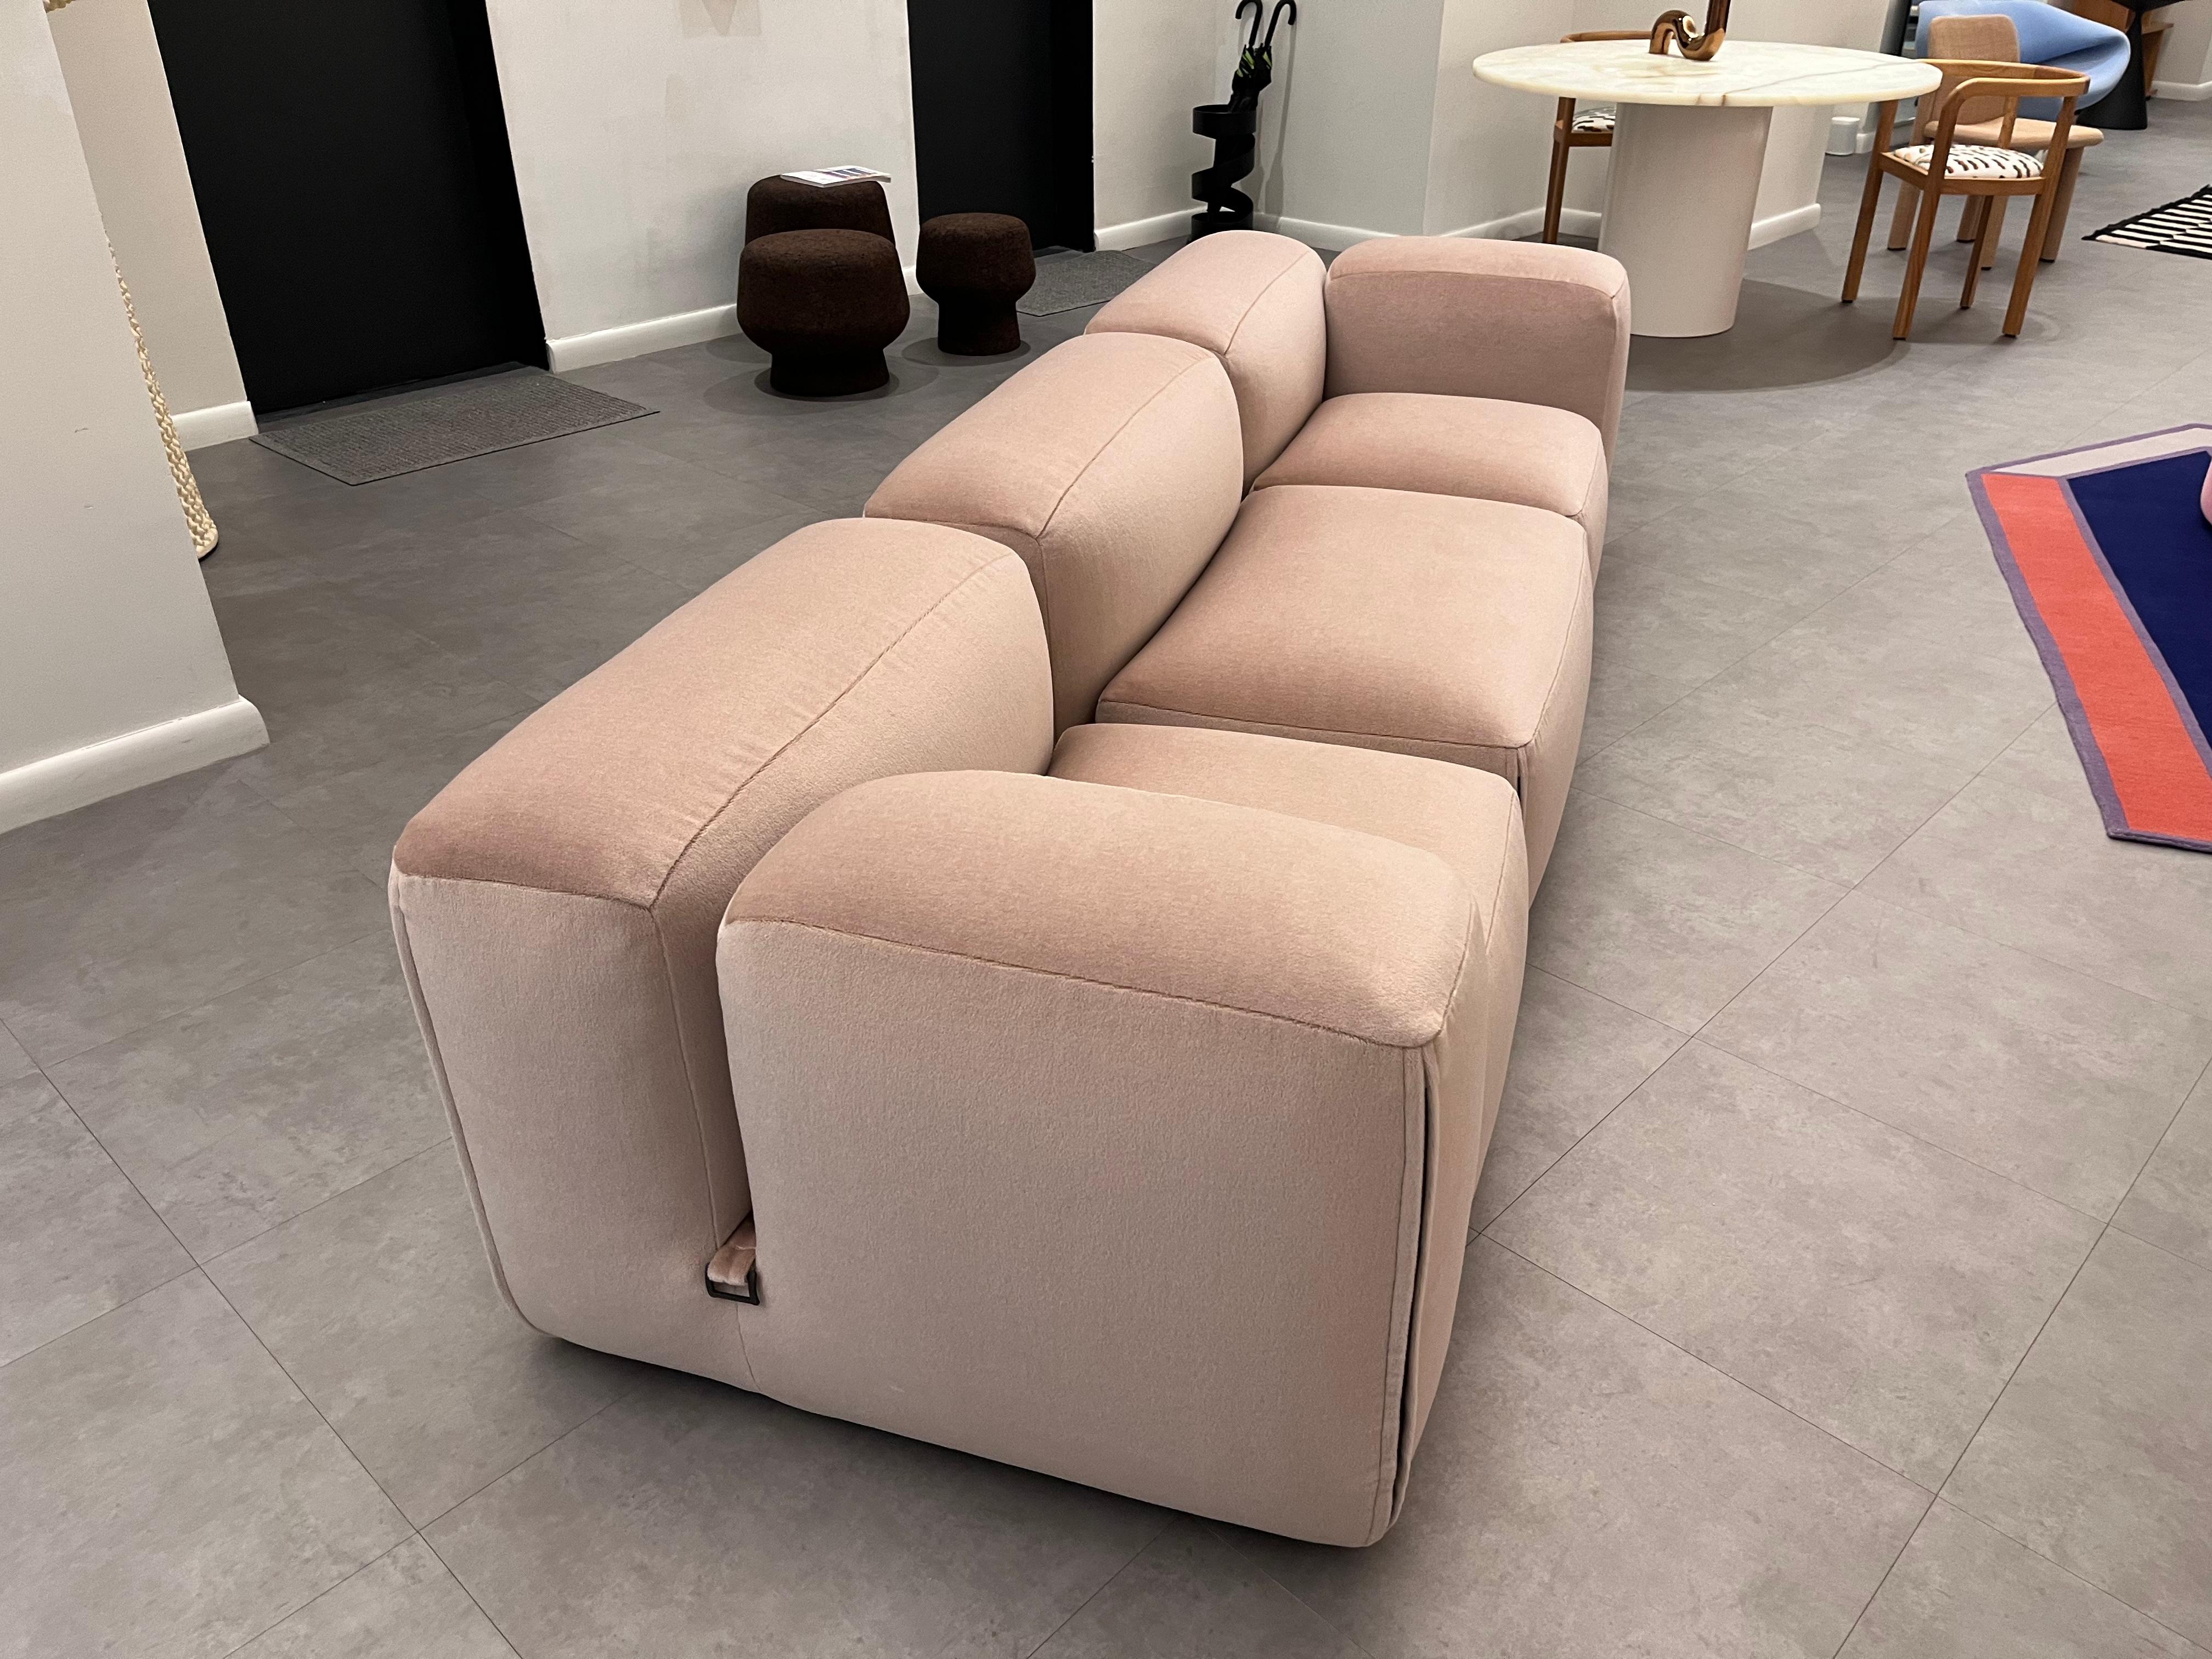  Tacchini Le Mura Modular Sofa by Mario Bellini in STOCK In Excellent Condition For Sale In New York, NY